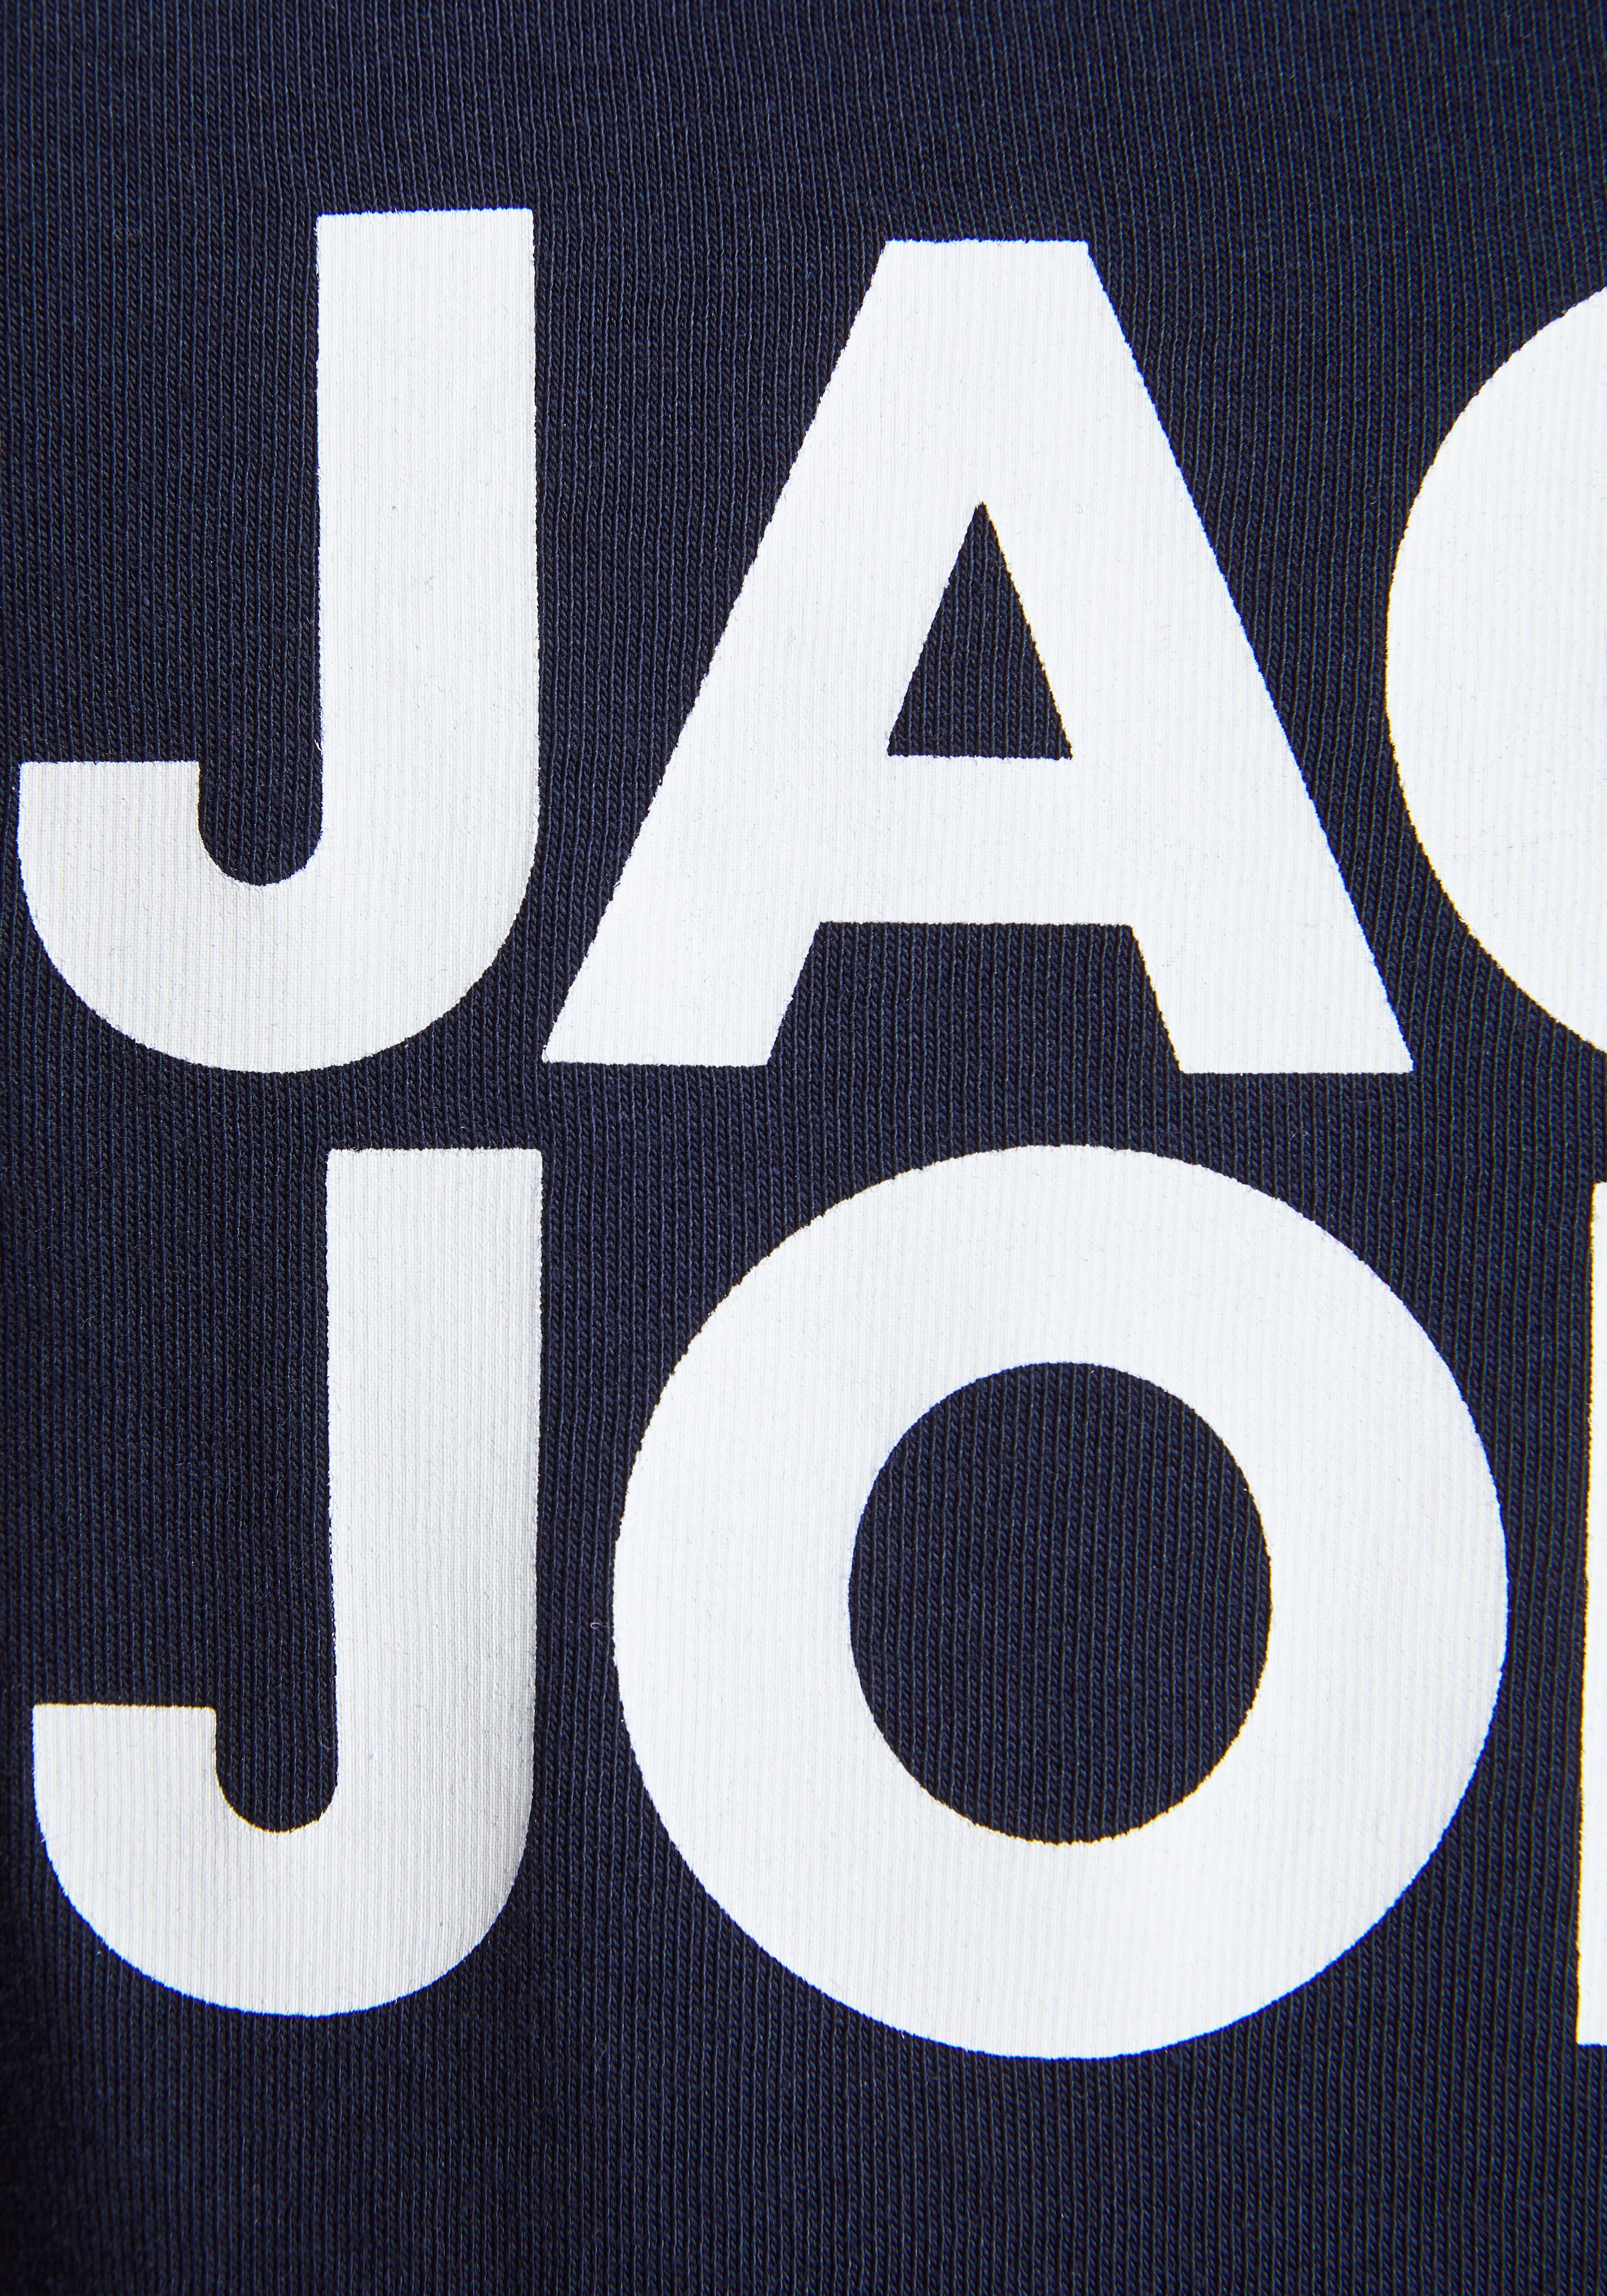 Jones & blazer/Large Print T-Shirt Jack navy Junior